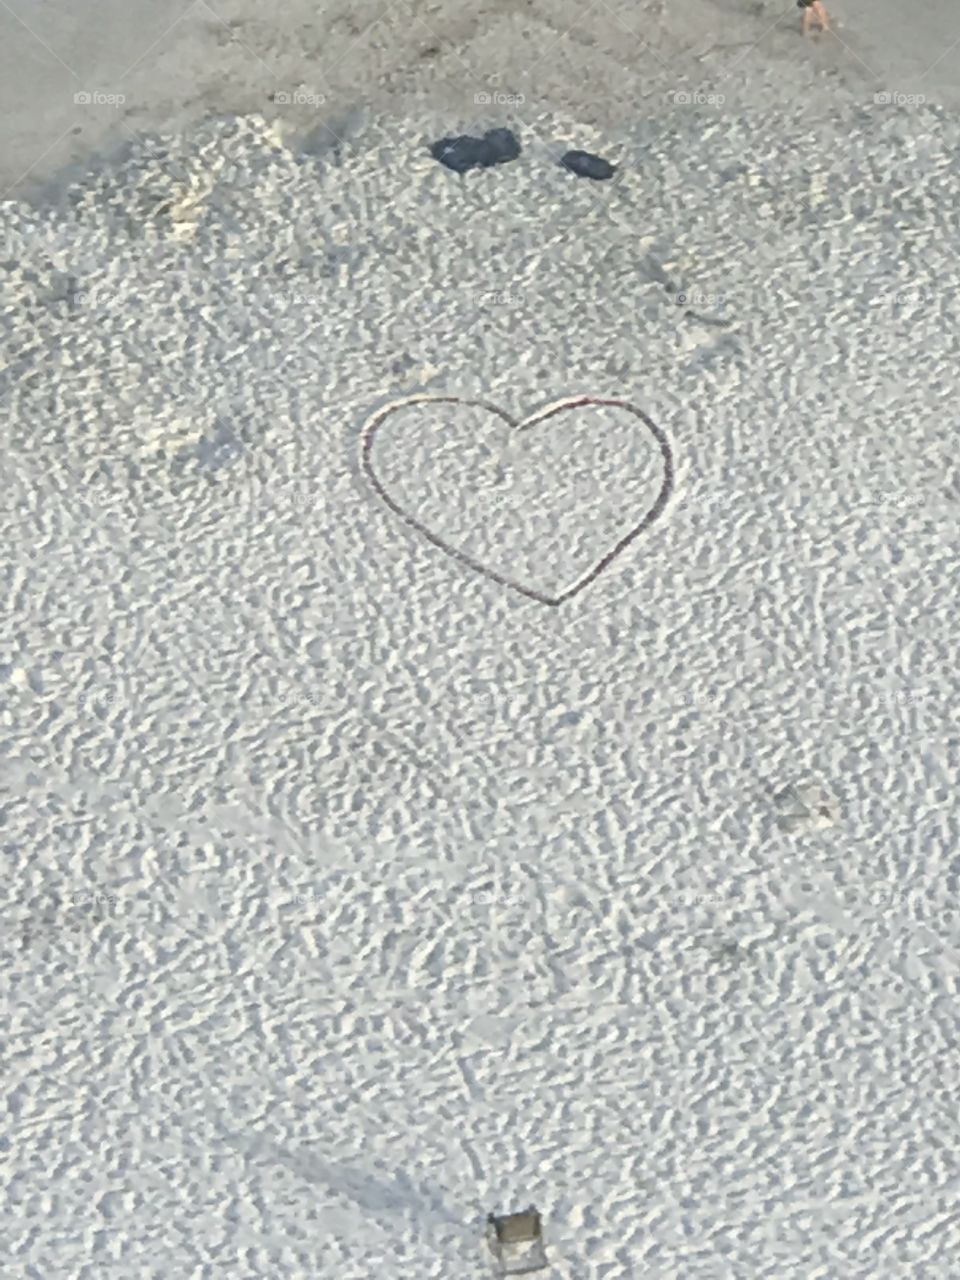 Beach heart